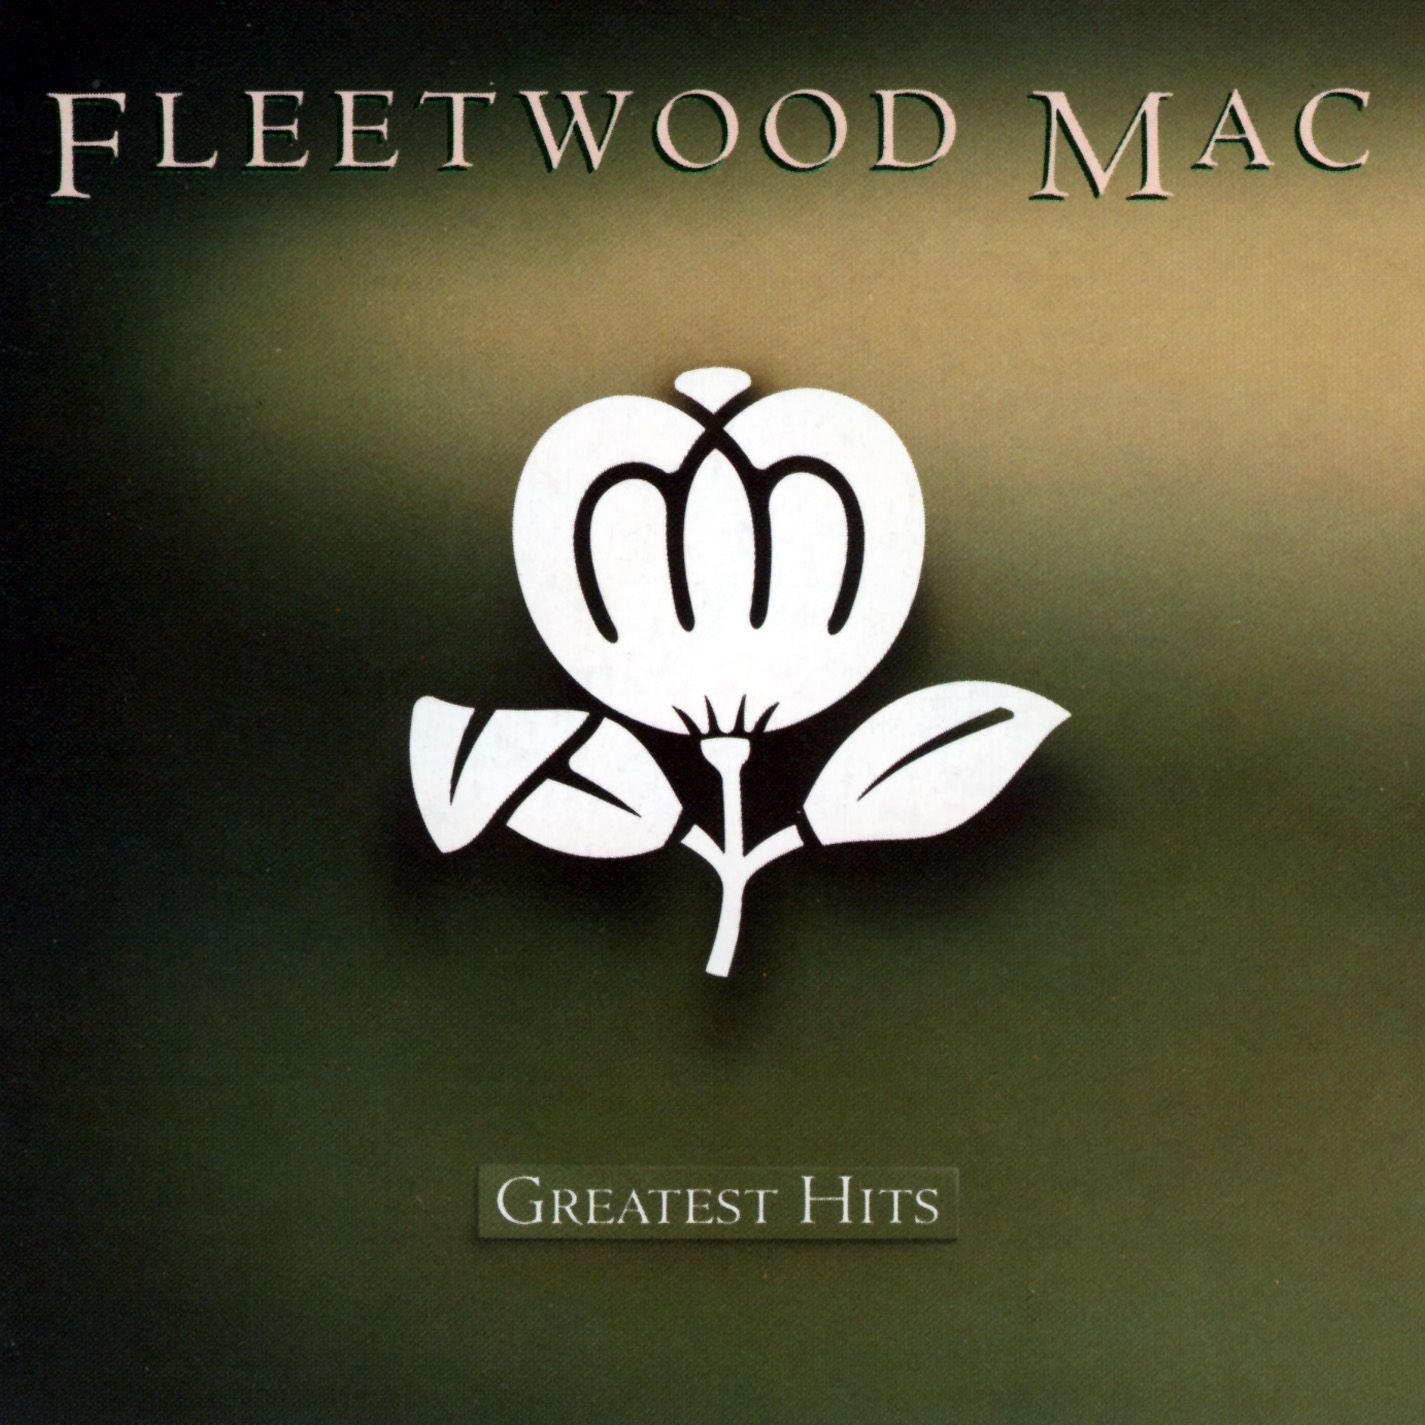 fleetwood mac greatest mp3 download free